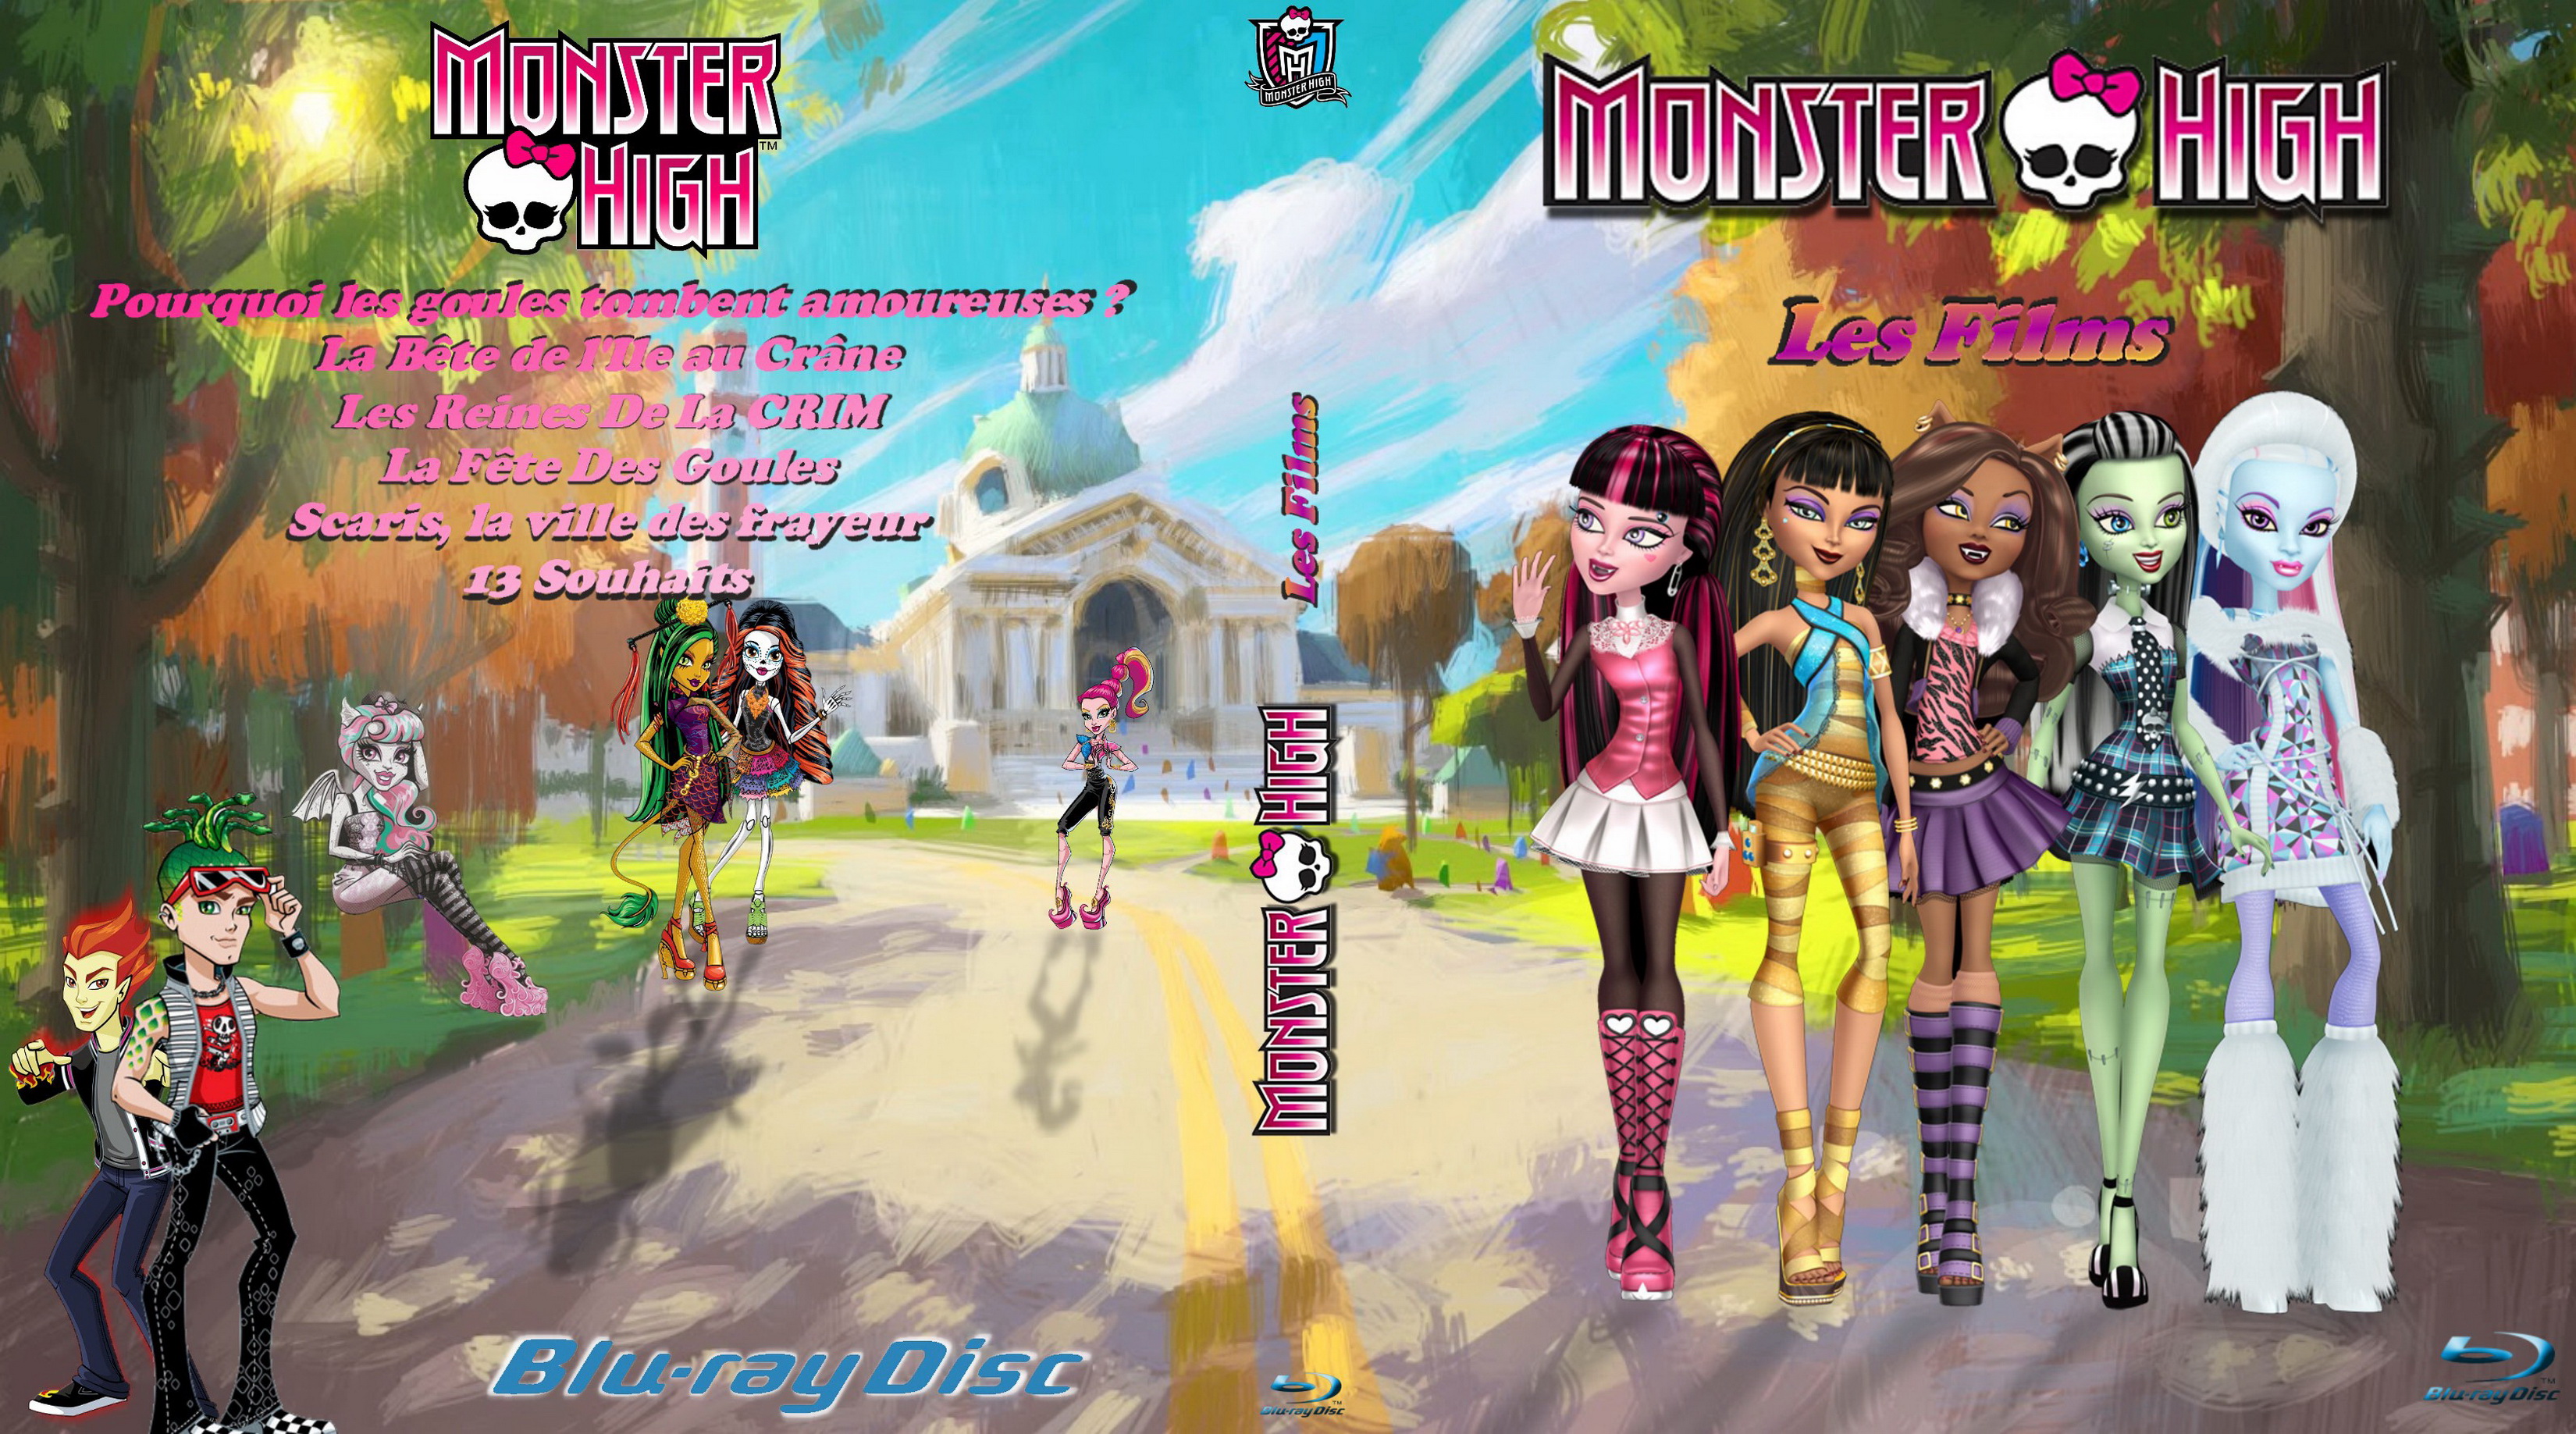 Jaquette DVD Monster high les films custom (BLU-RAY)